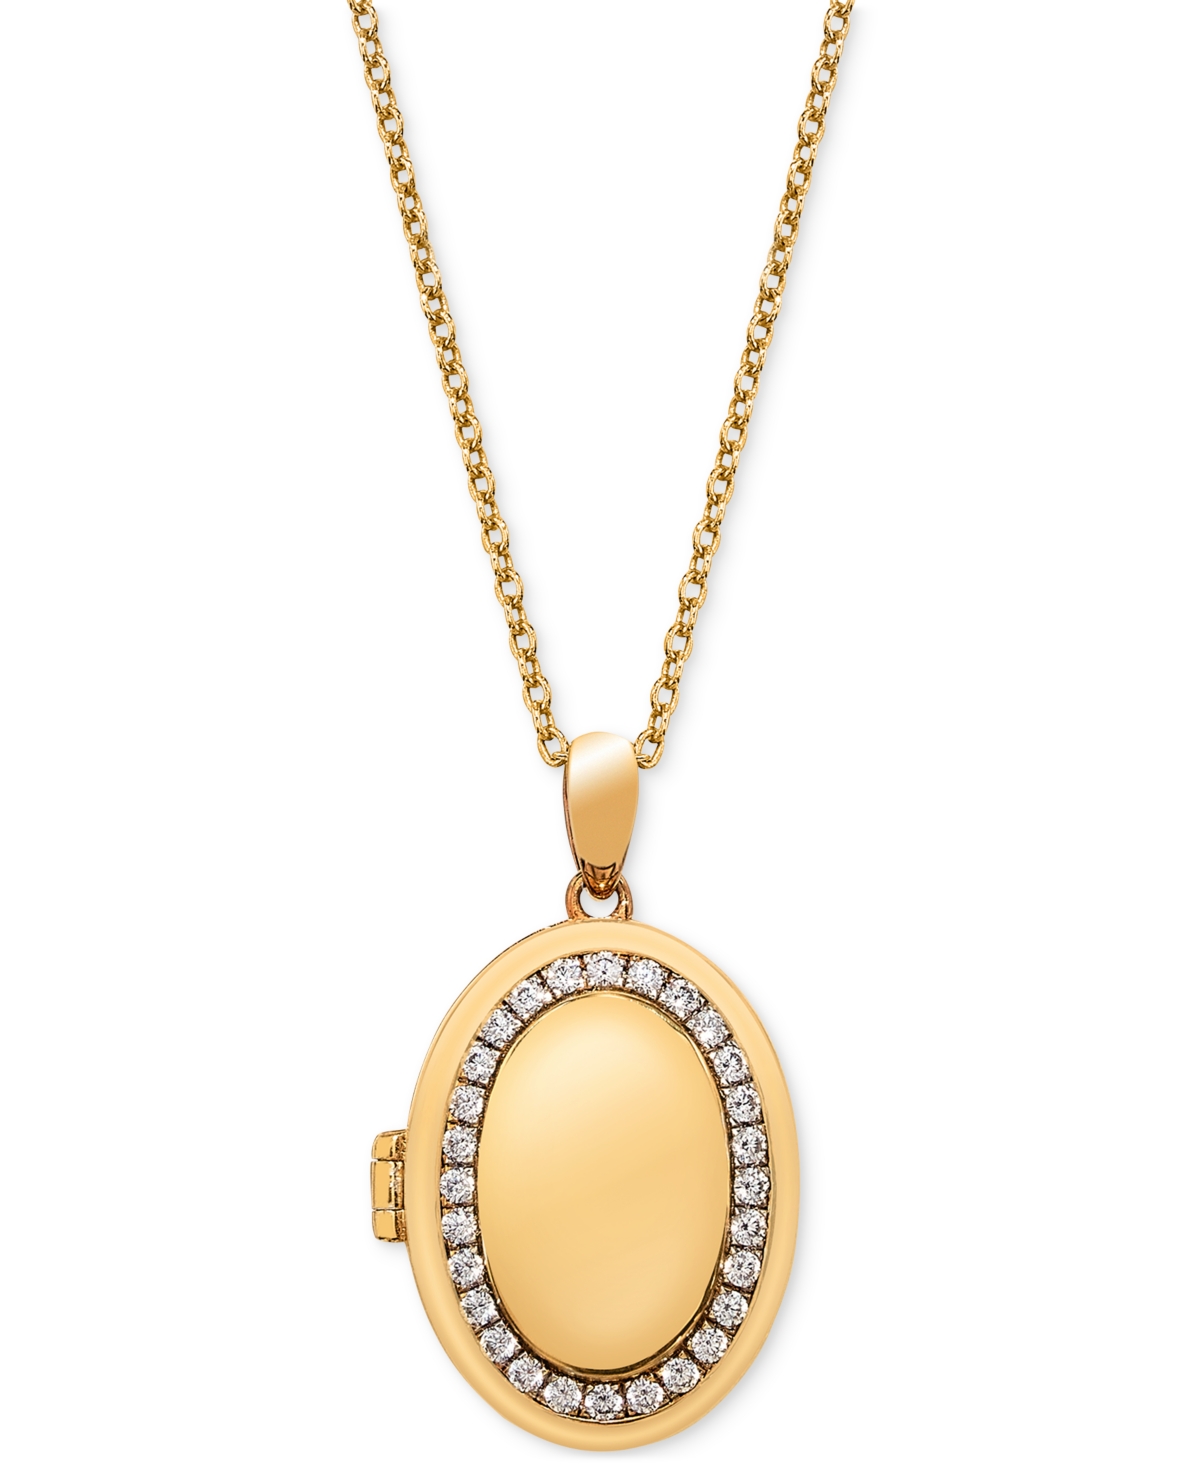 Bezel Gemstone Round Pendant Necklace - Gold Plated Chain - Crystal Quartz  (16-24).